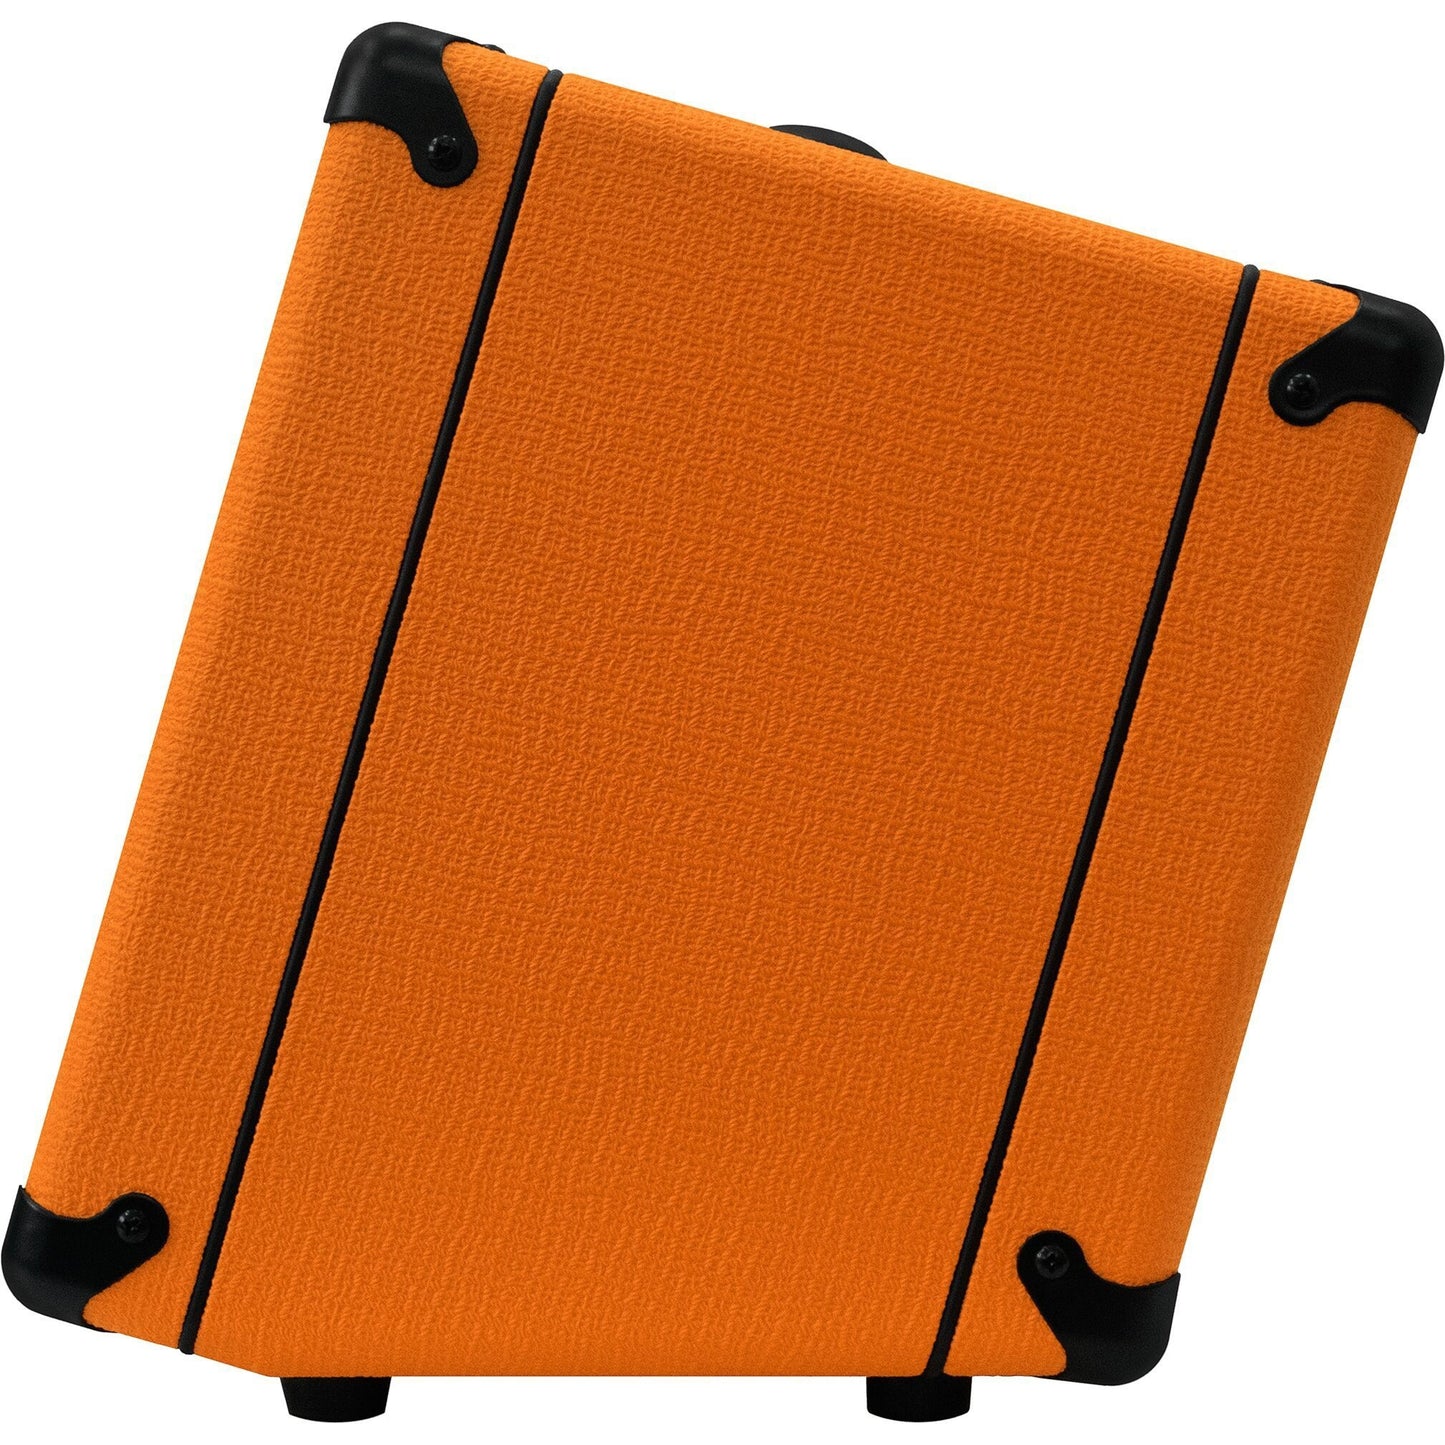 Orange Crush Acoustic 30 Guitar Combo Amplifier (30 Watts, 1x8 Inch), Orange